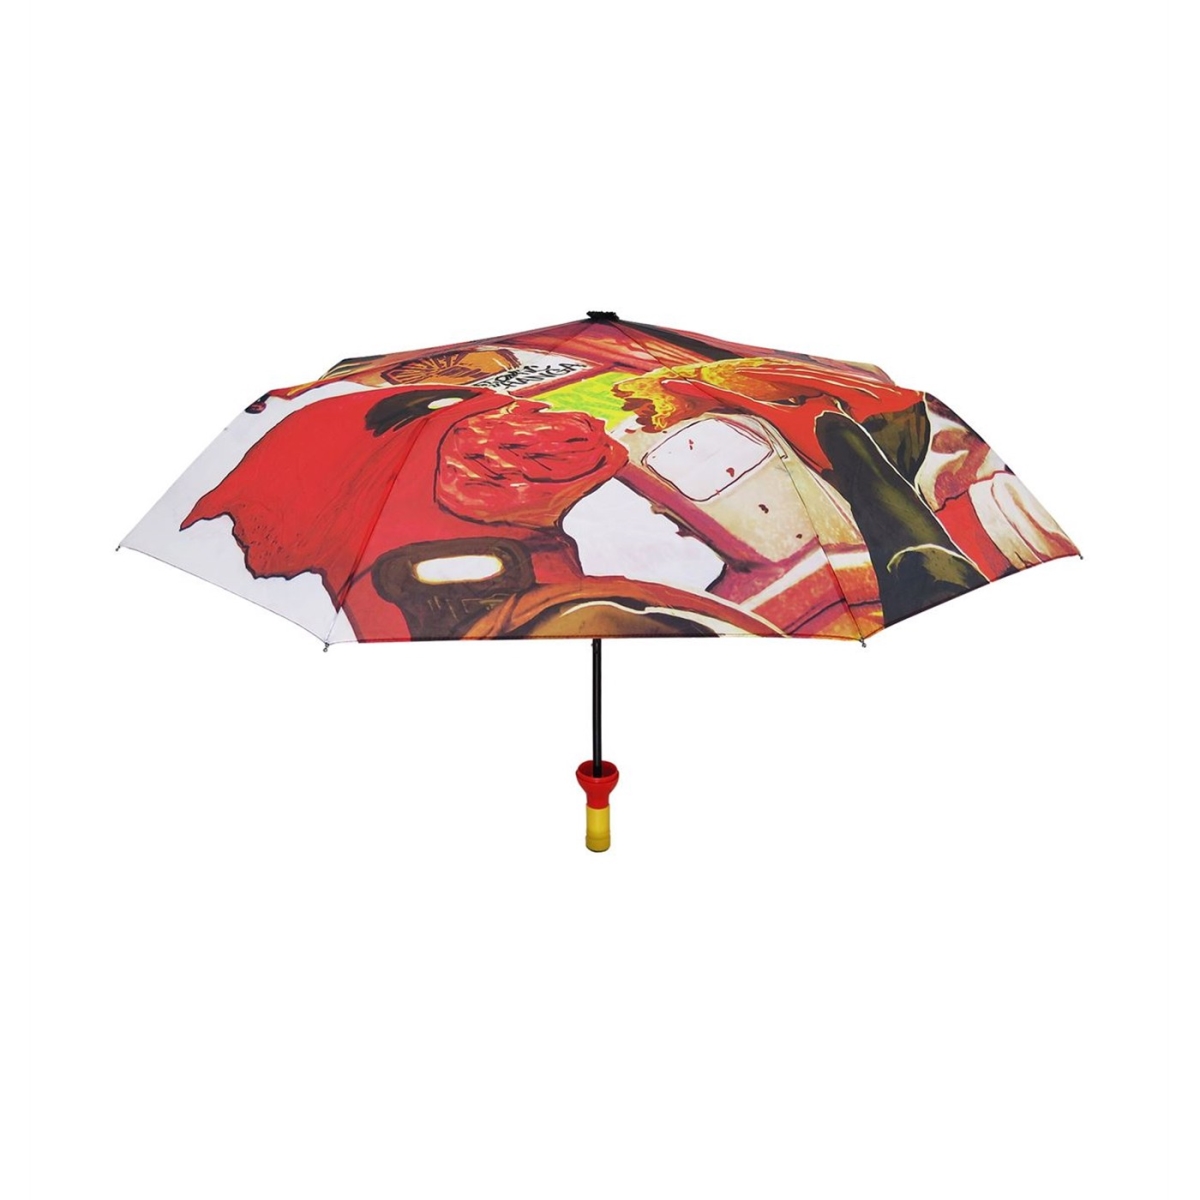 Picture of Deadpool umbdpchimsauce Deadpool Chimichanga Sauce Umbrella